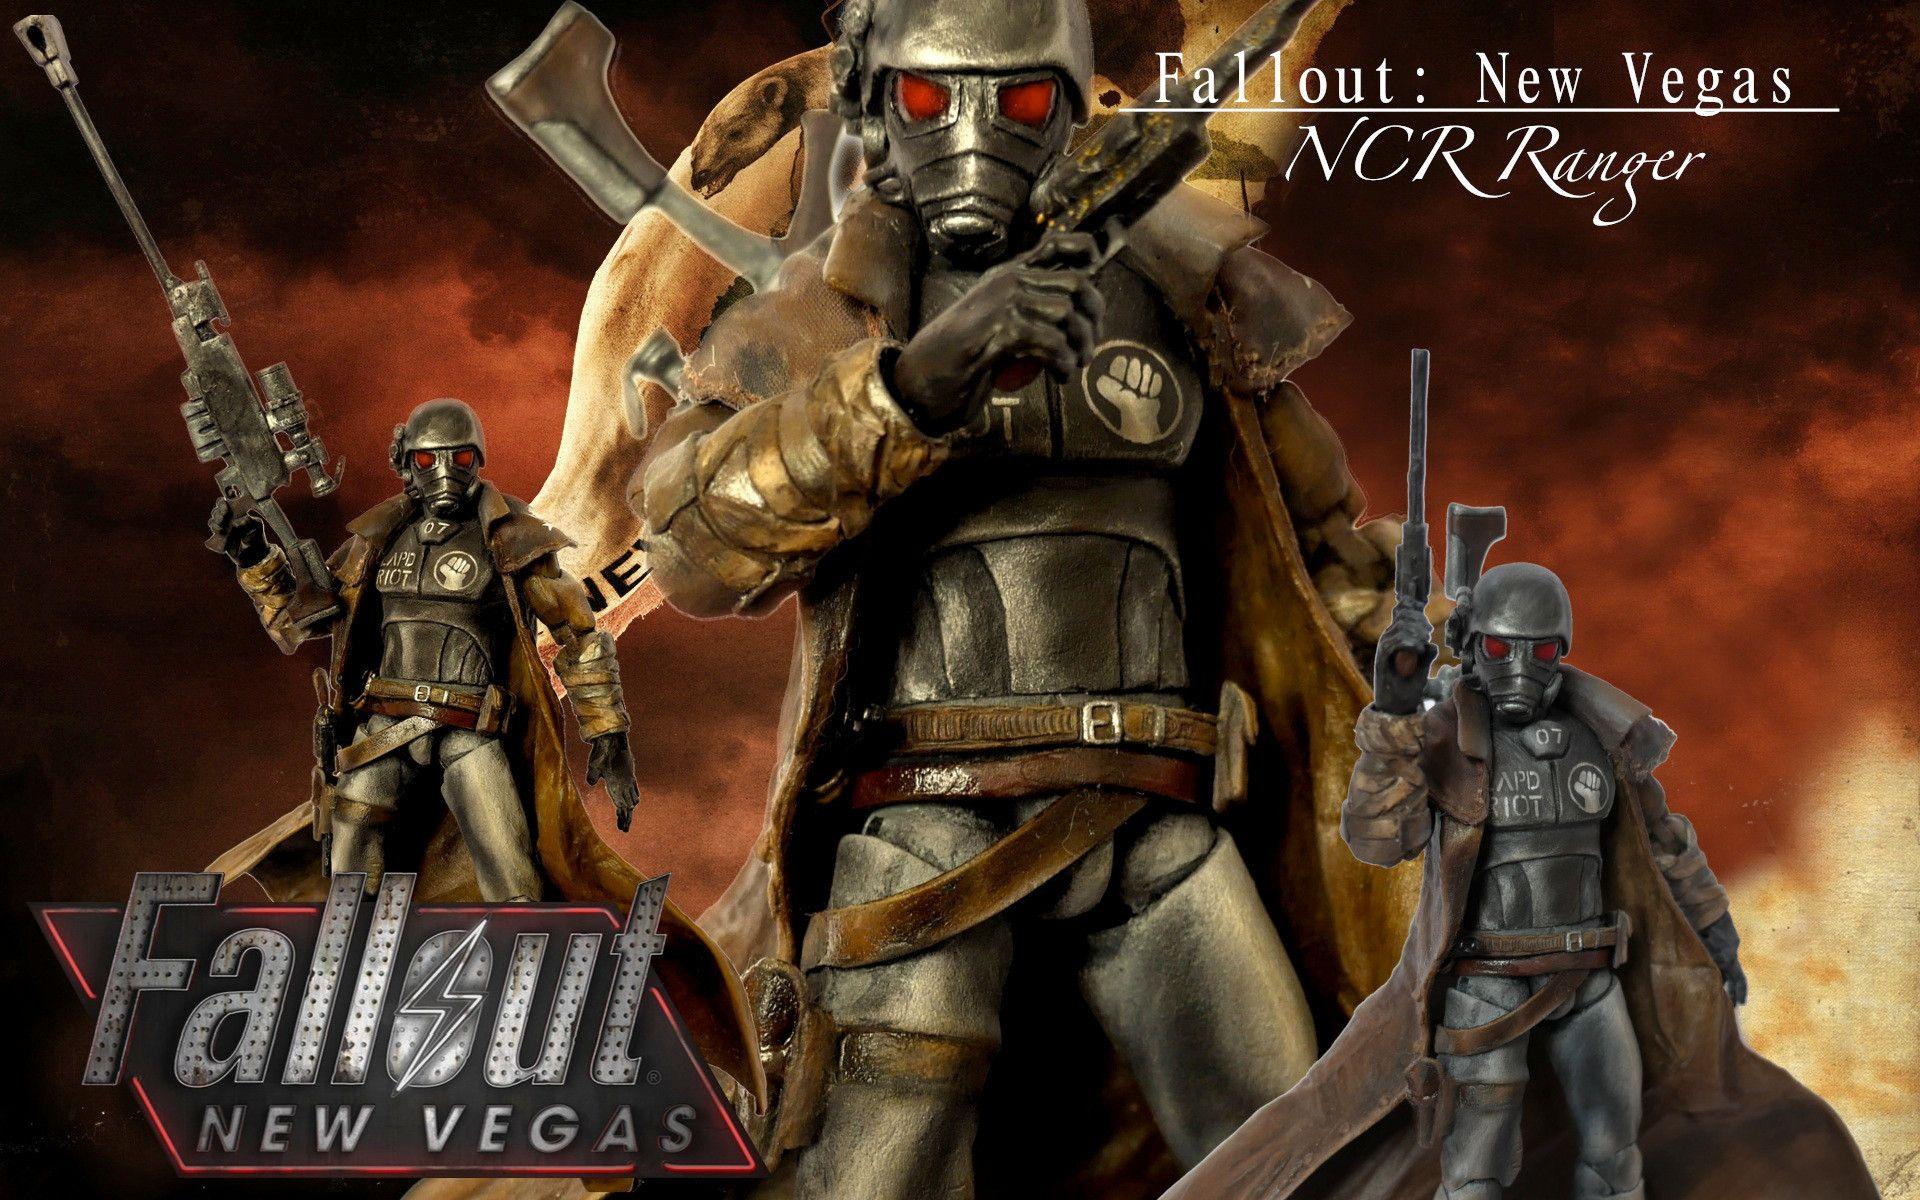 Fallout New Vegas NCR Ranger Action Figure